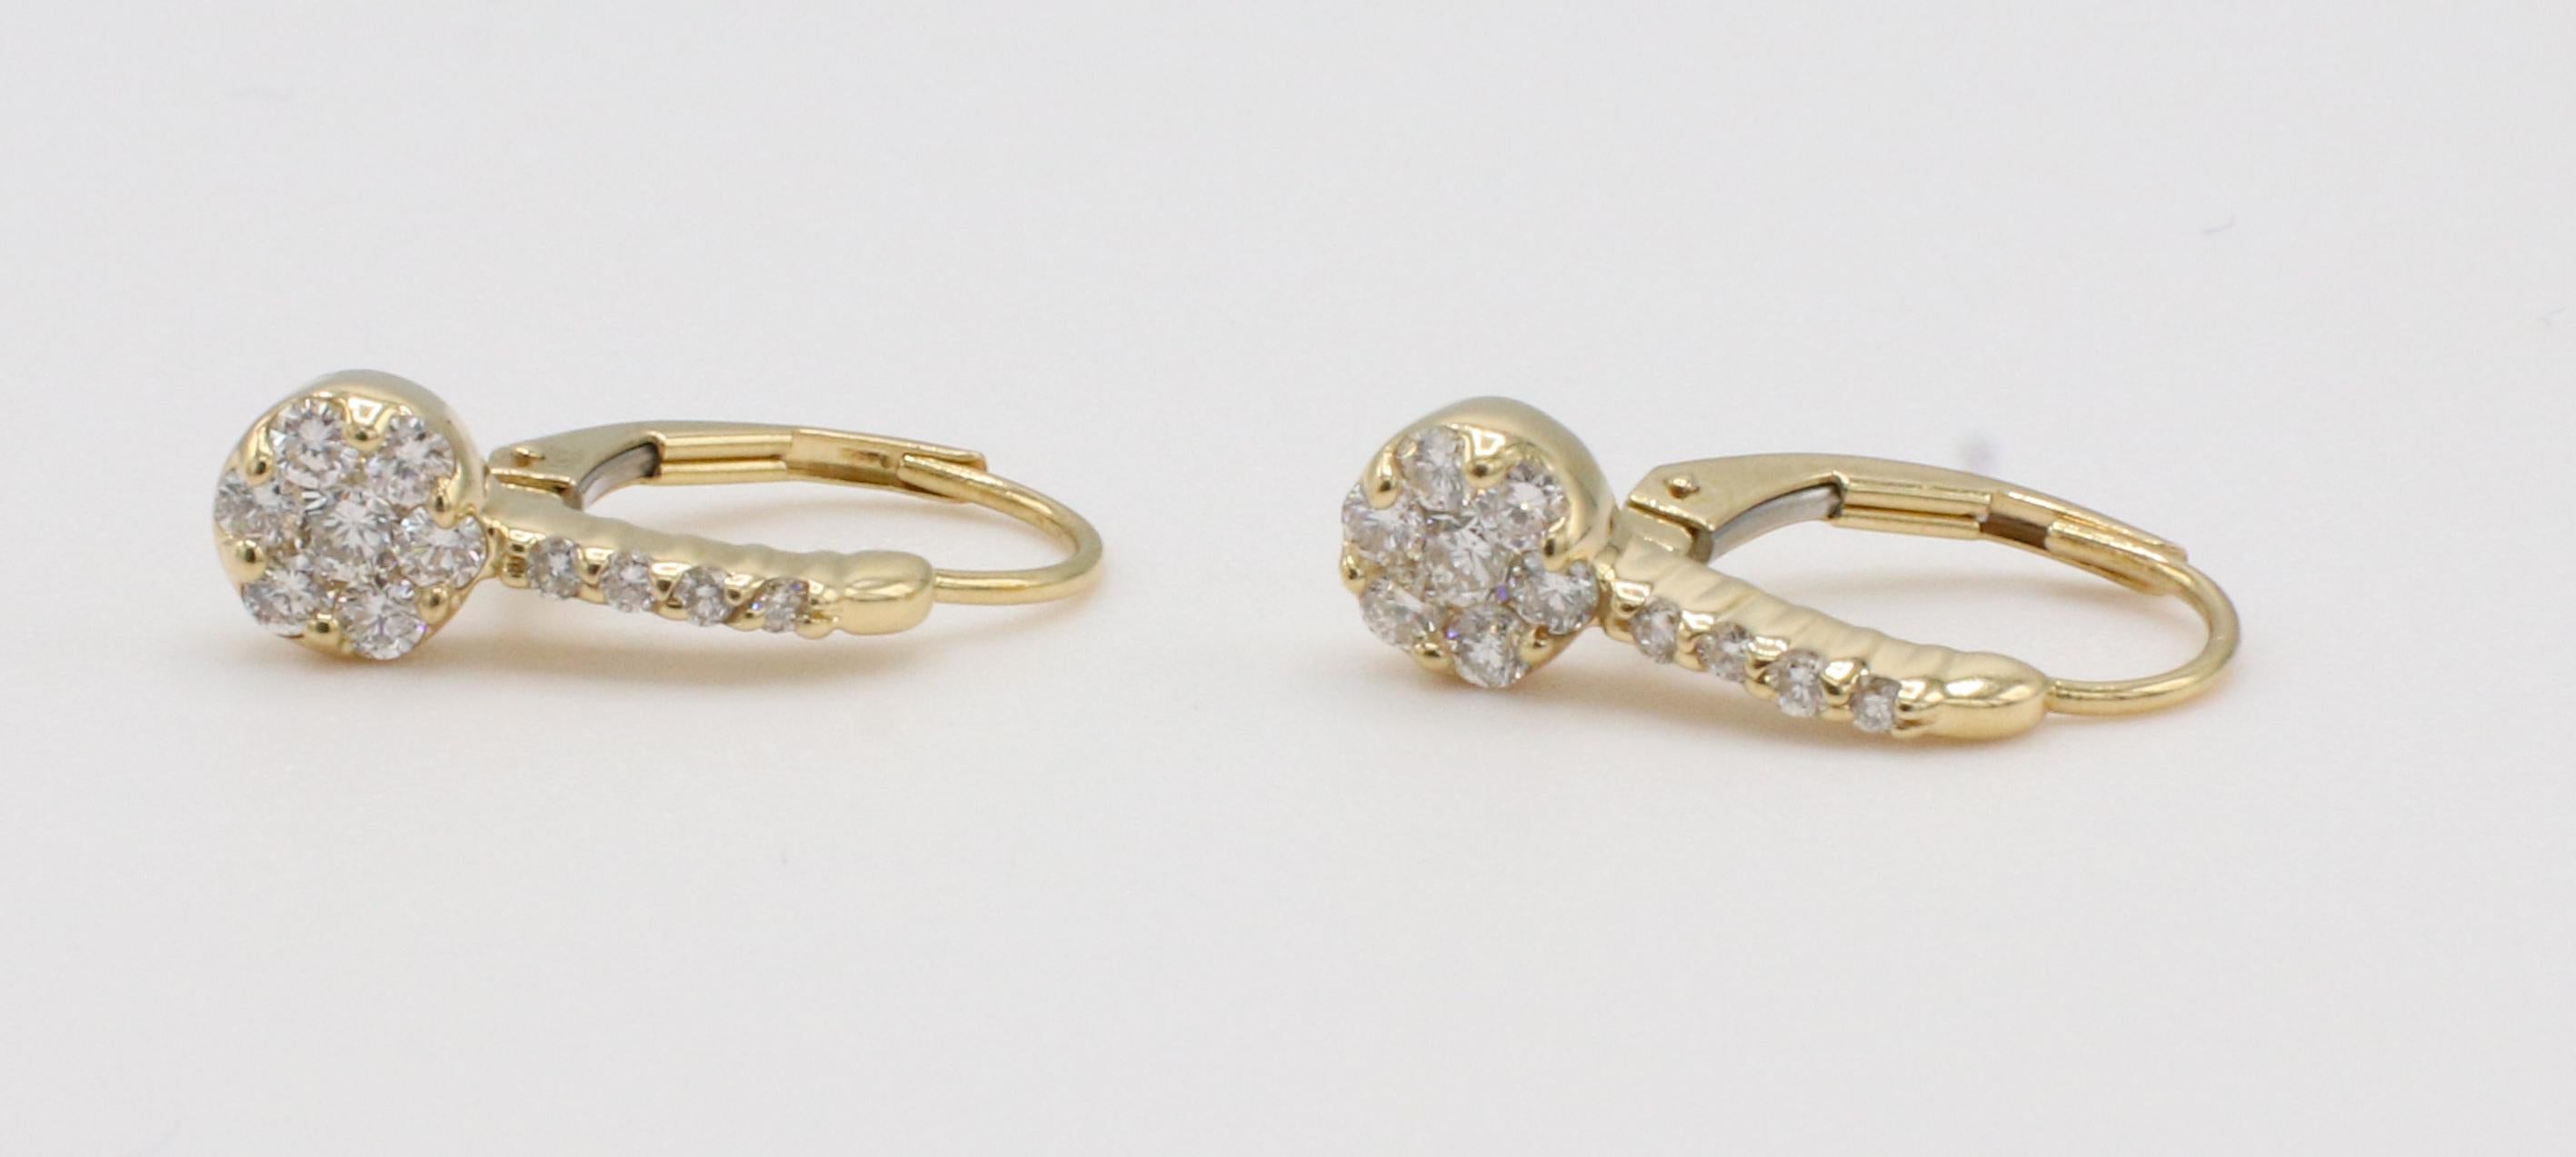 14 Karat Yellow Gold Natural Diamond Cluster Drop Earrings 
Metal: 14k yellow gold
Weight: 1.93 grams
Diamonds: Approx. .32 carats G-H VS round natural diamonds
Length: 14.5mm
Width: 5.5mm